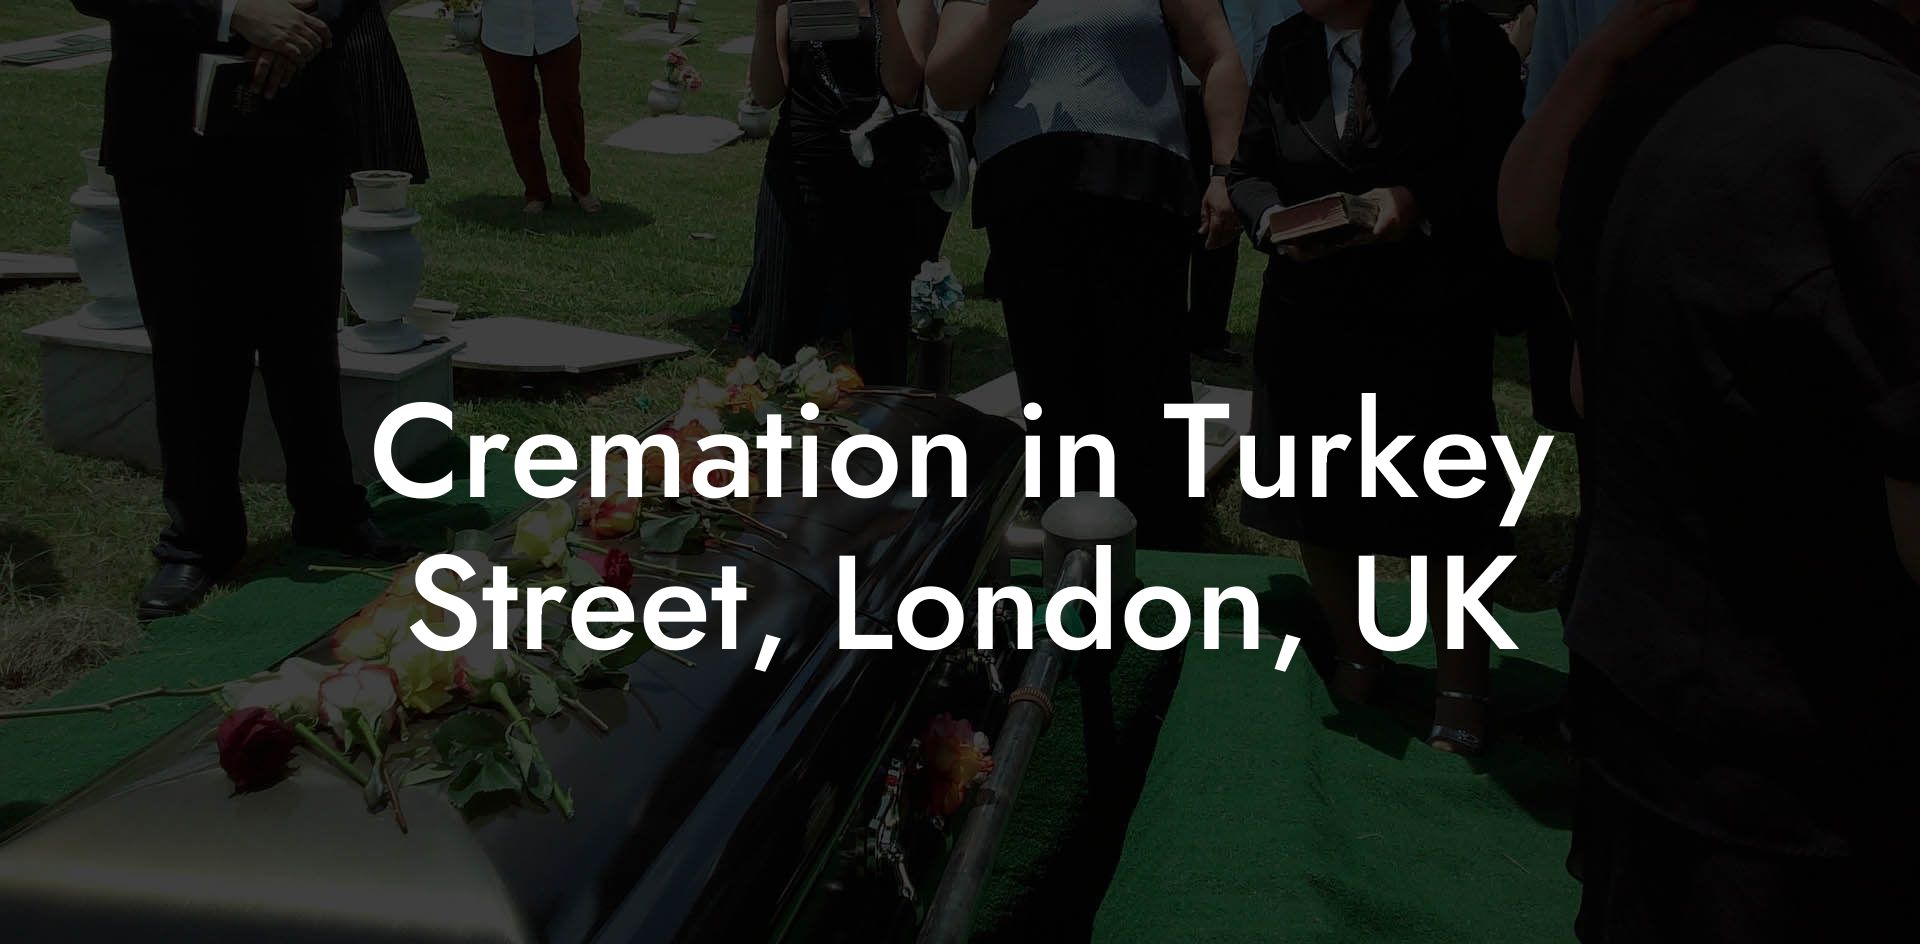 Cremation in Turkey Street, London, UK